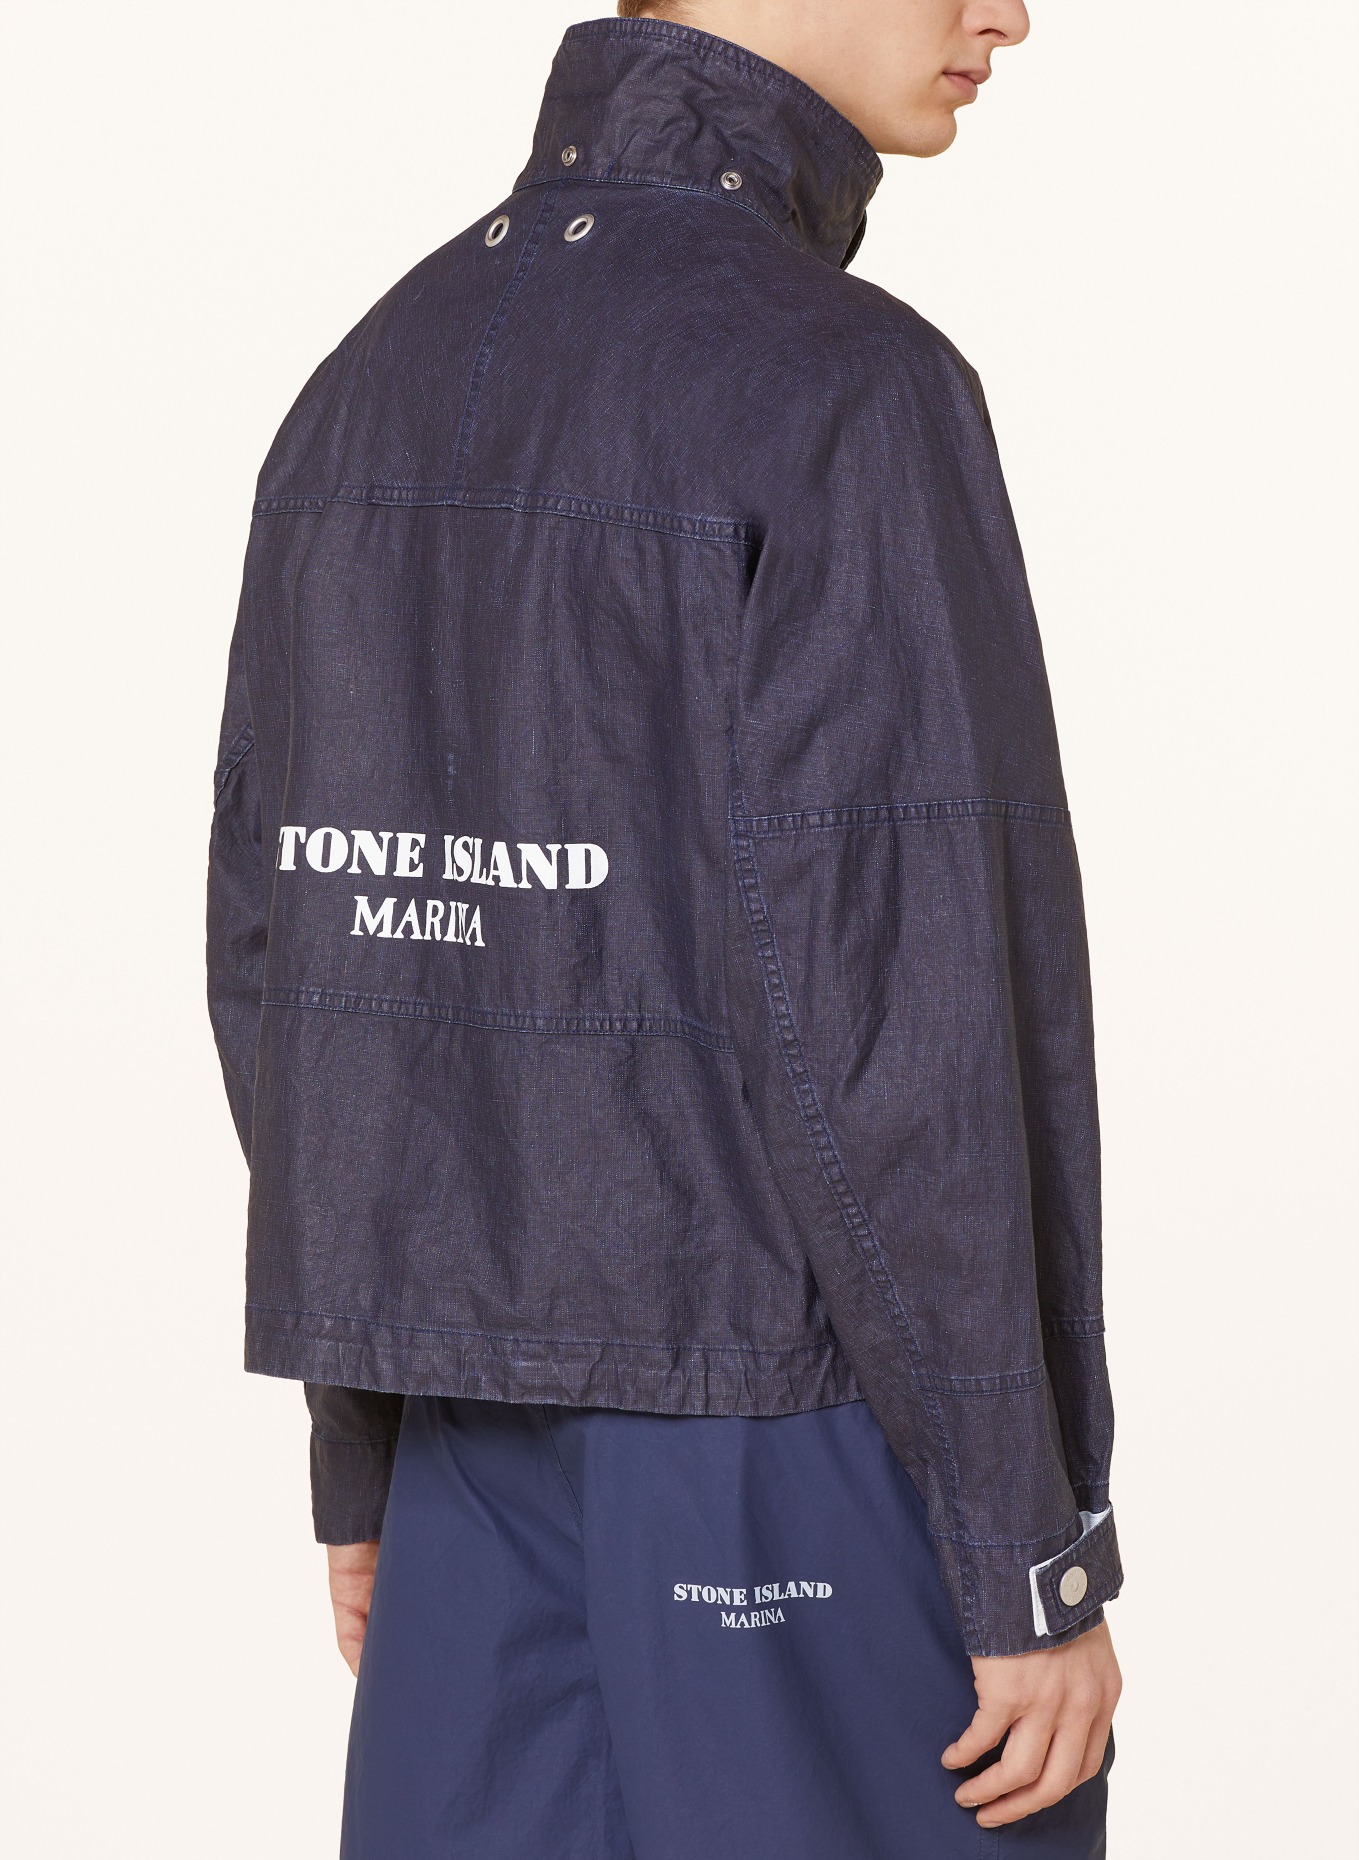 STONE ISLAND Linen jacket MARINA in denim look with detachable hood, Color: DARK BLUE (Image 6)